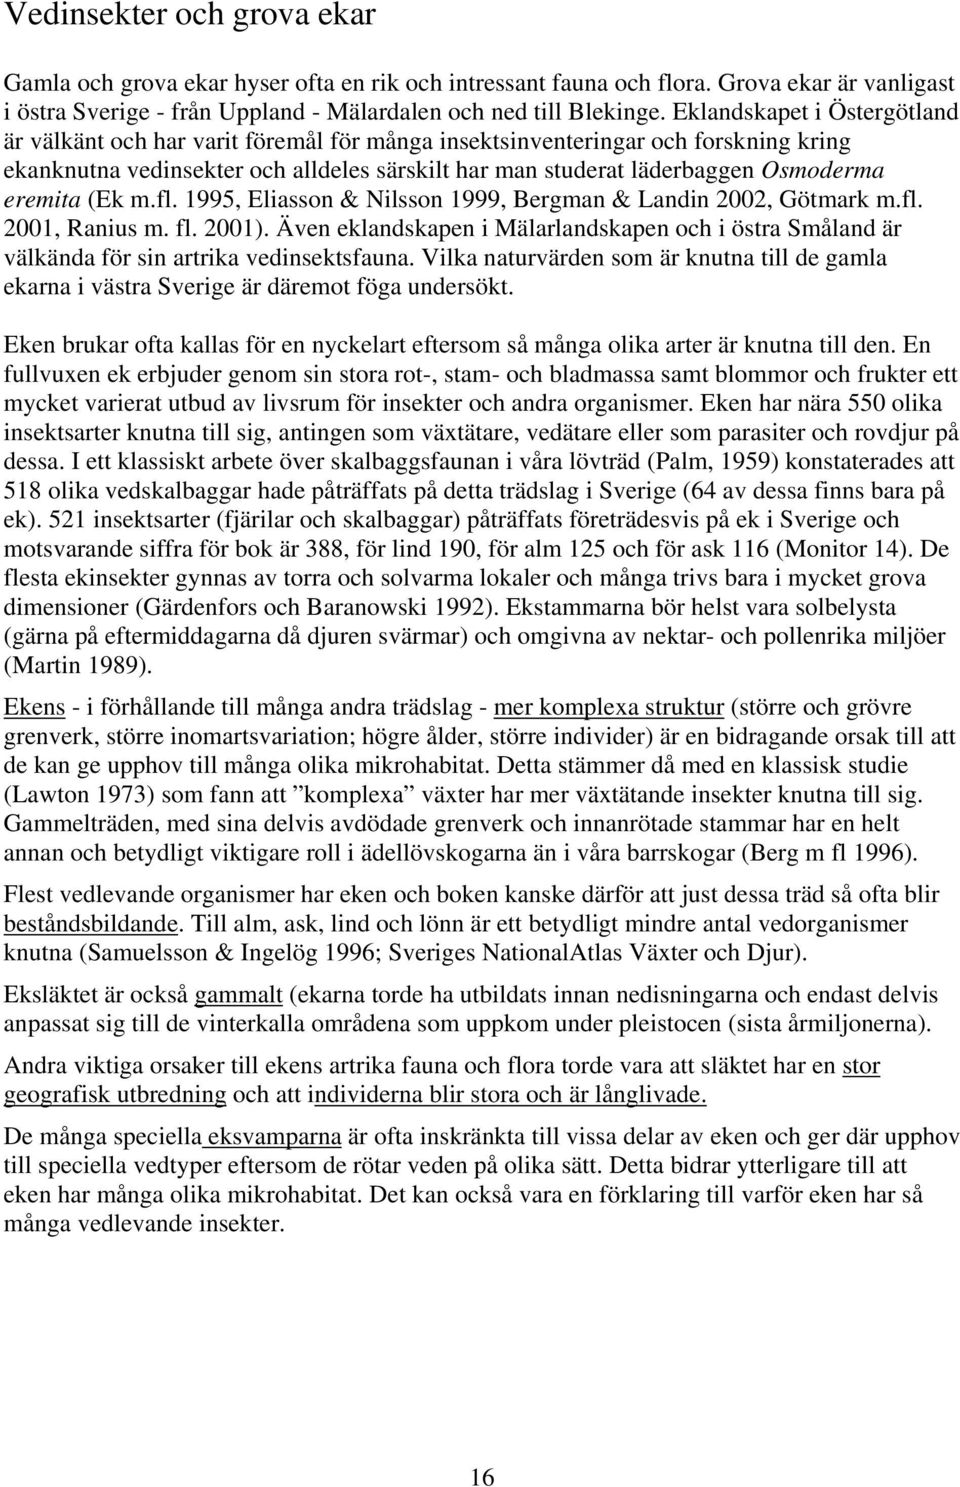 eremita (Ek m.fl. 1995, Eliasson & Nilsson 1999, Bergman & Landin 2002, Götmark m.fl. 2001, Ranius m. fl. 2001).